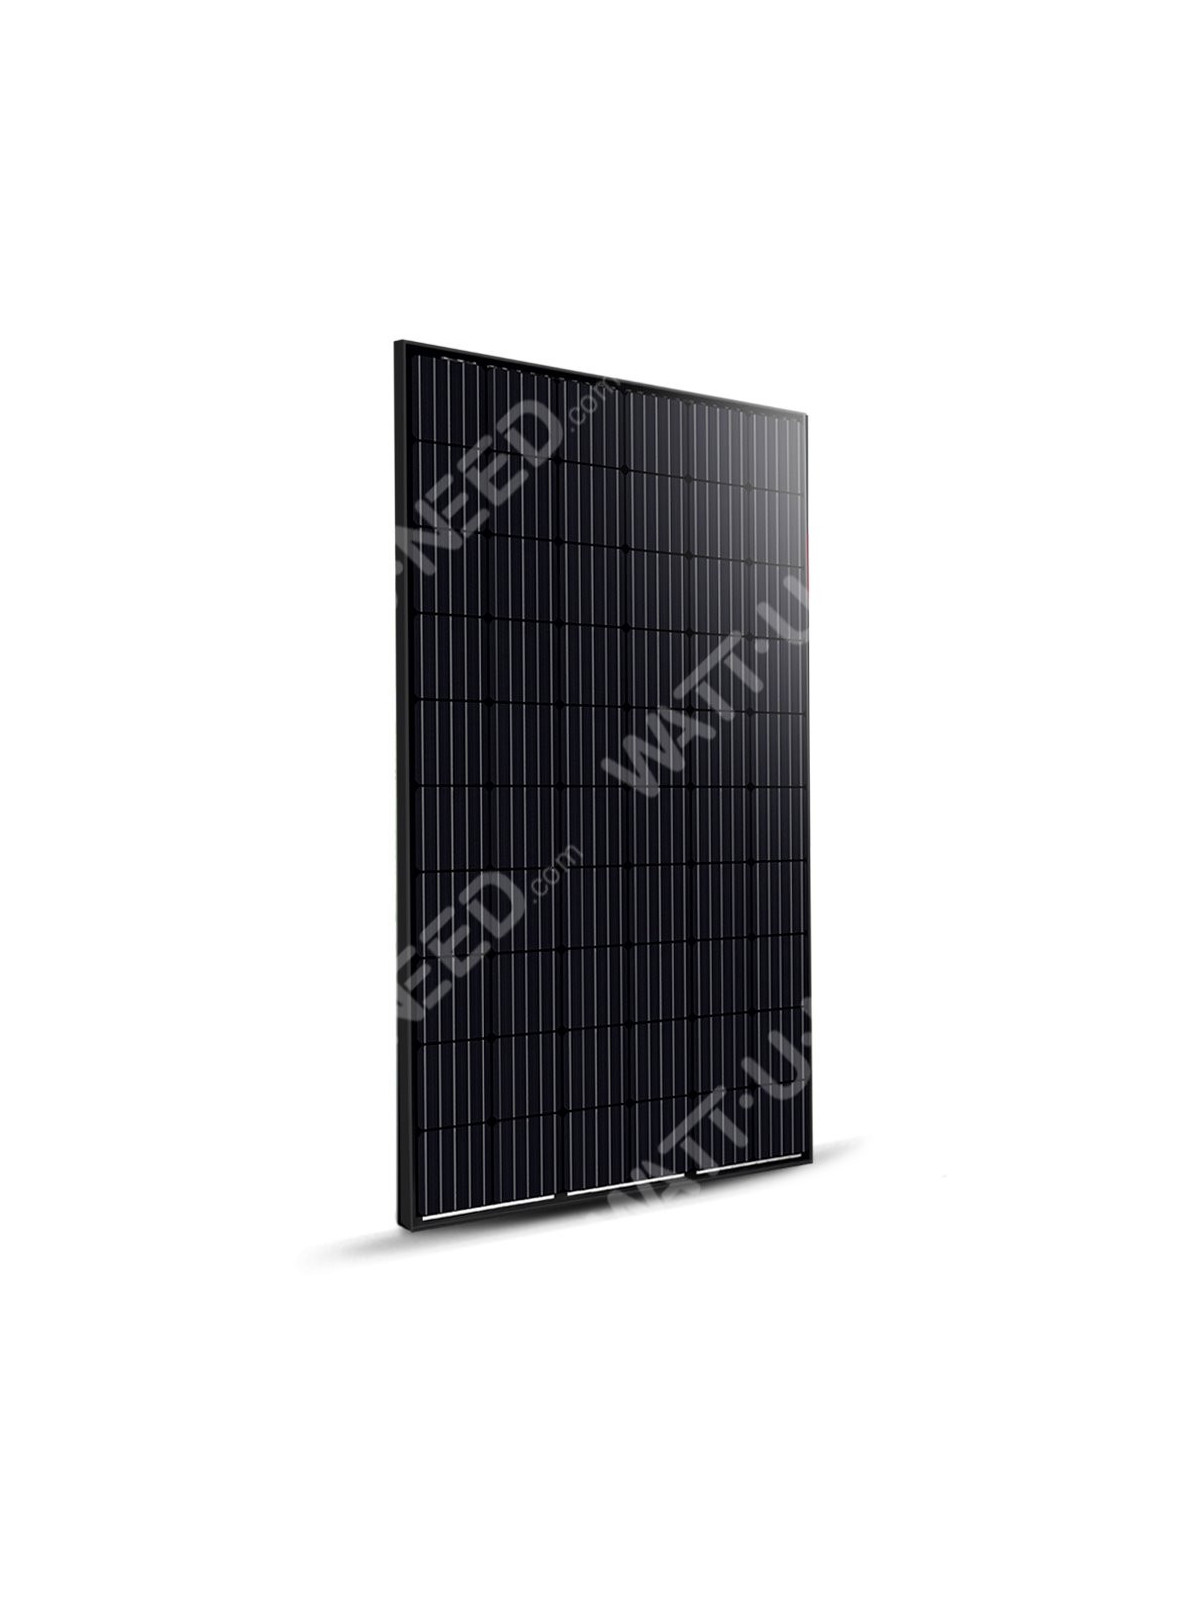 Solares panel JNLSOLAR negro completo